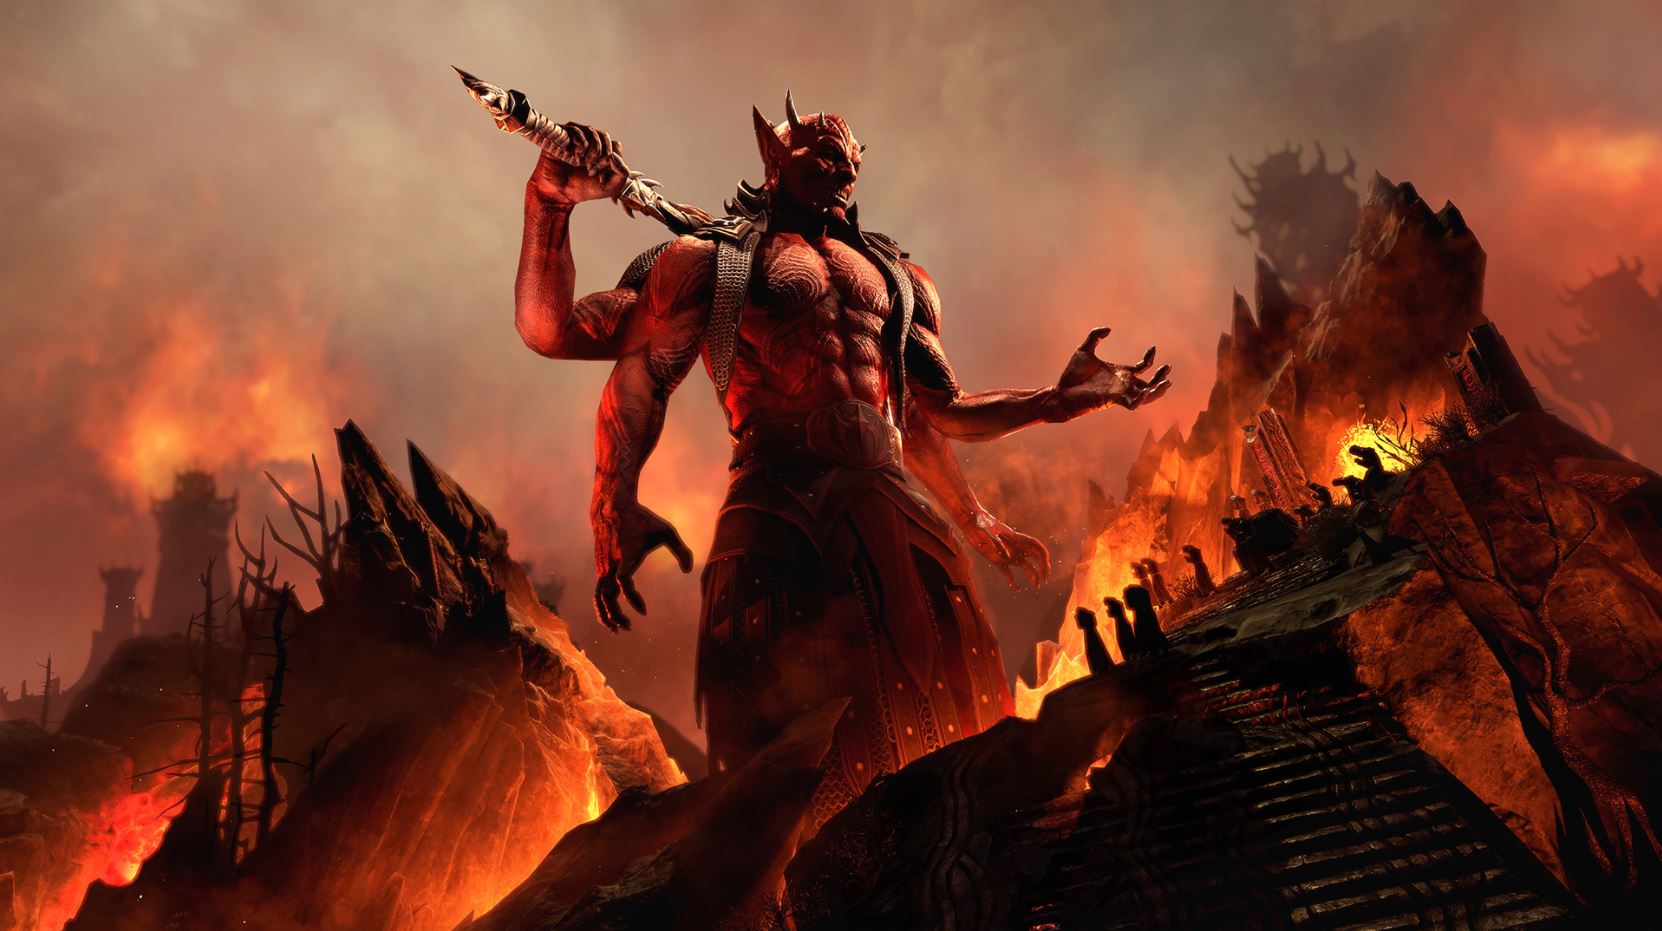 The Elder Scrolls Online Year-Long 'Gates Of Oblivion' Narrative Detailed, With Major Blackwood Releasing June 8 On PS4 - PlayStation Universe